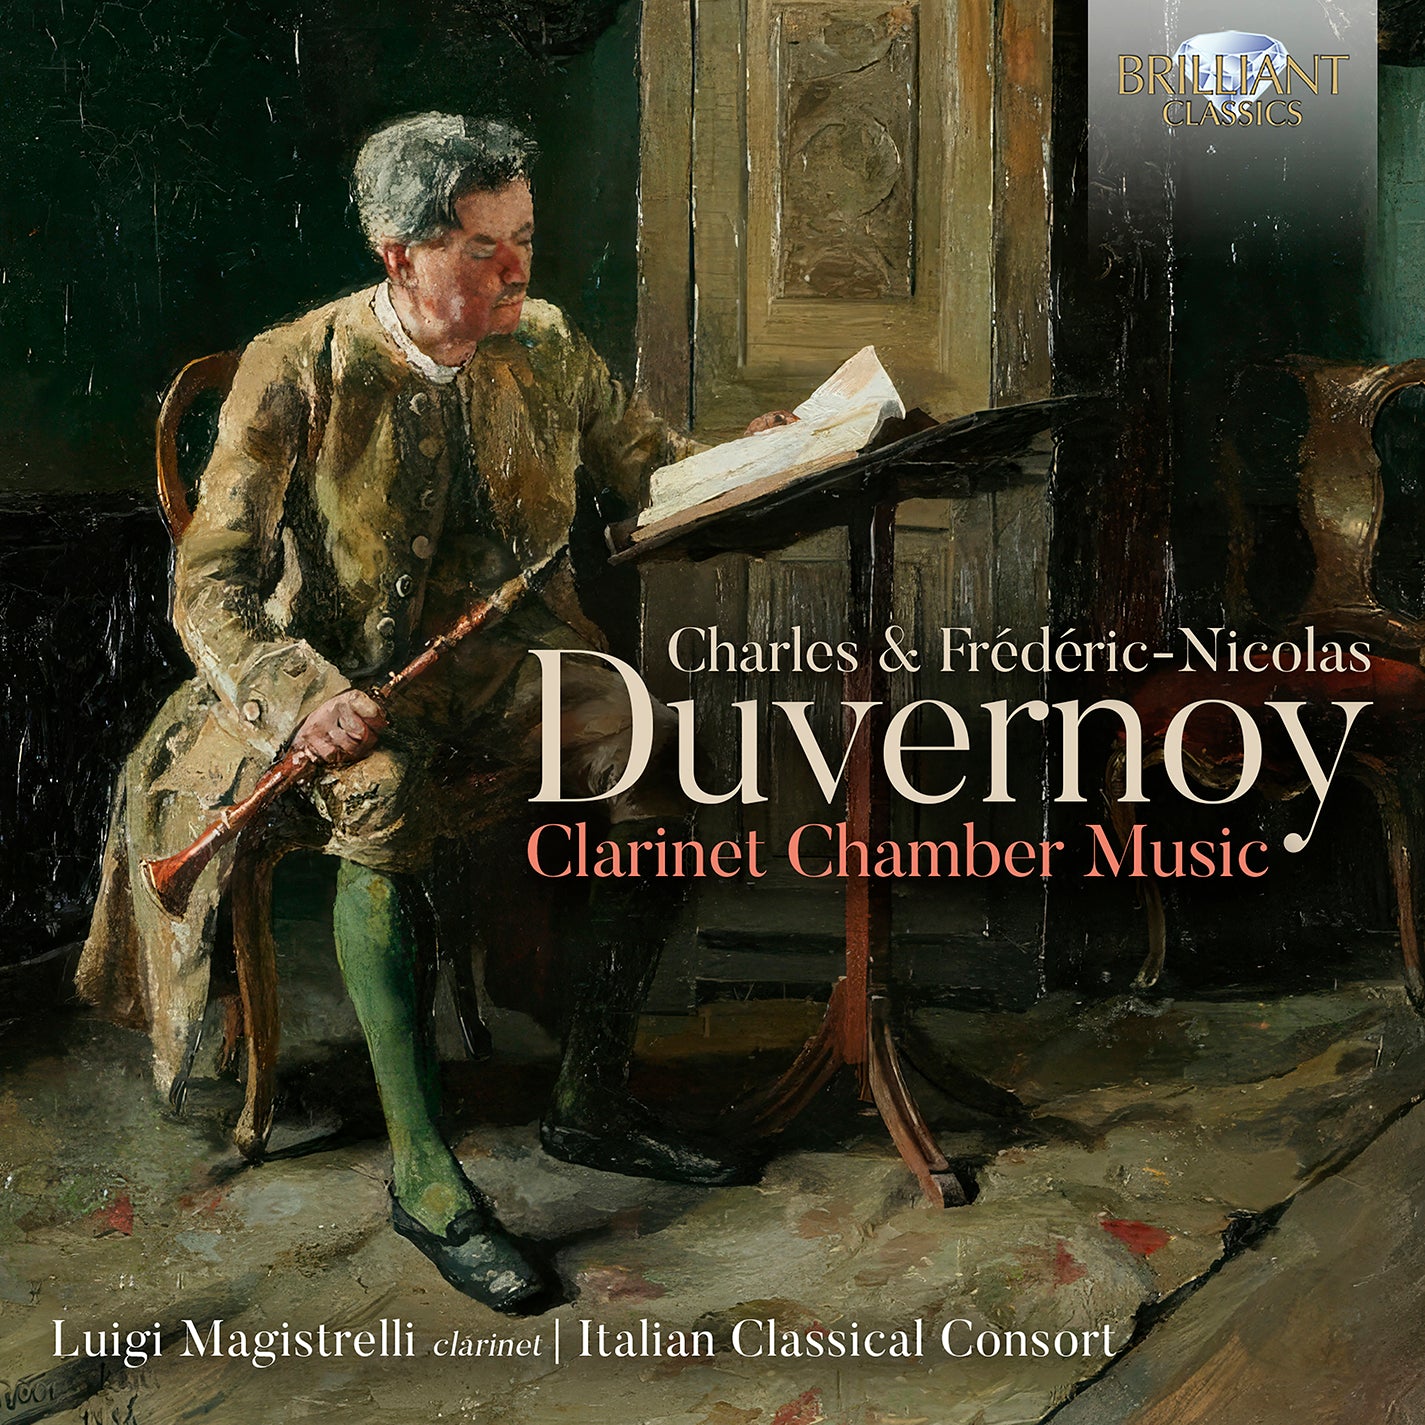 Duvernoy & Duvernoy: Clarinet Chamber Music / Magistrelli, Italian Classical Consort